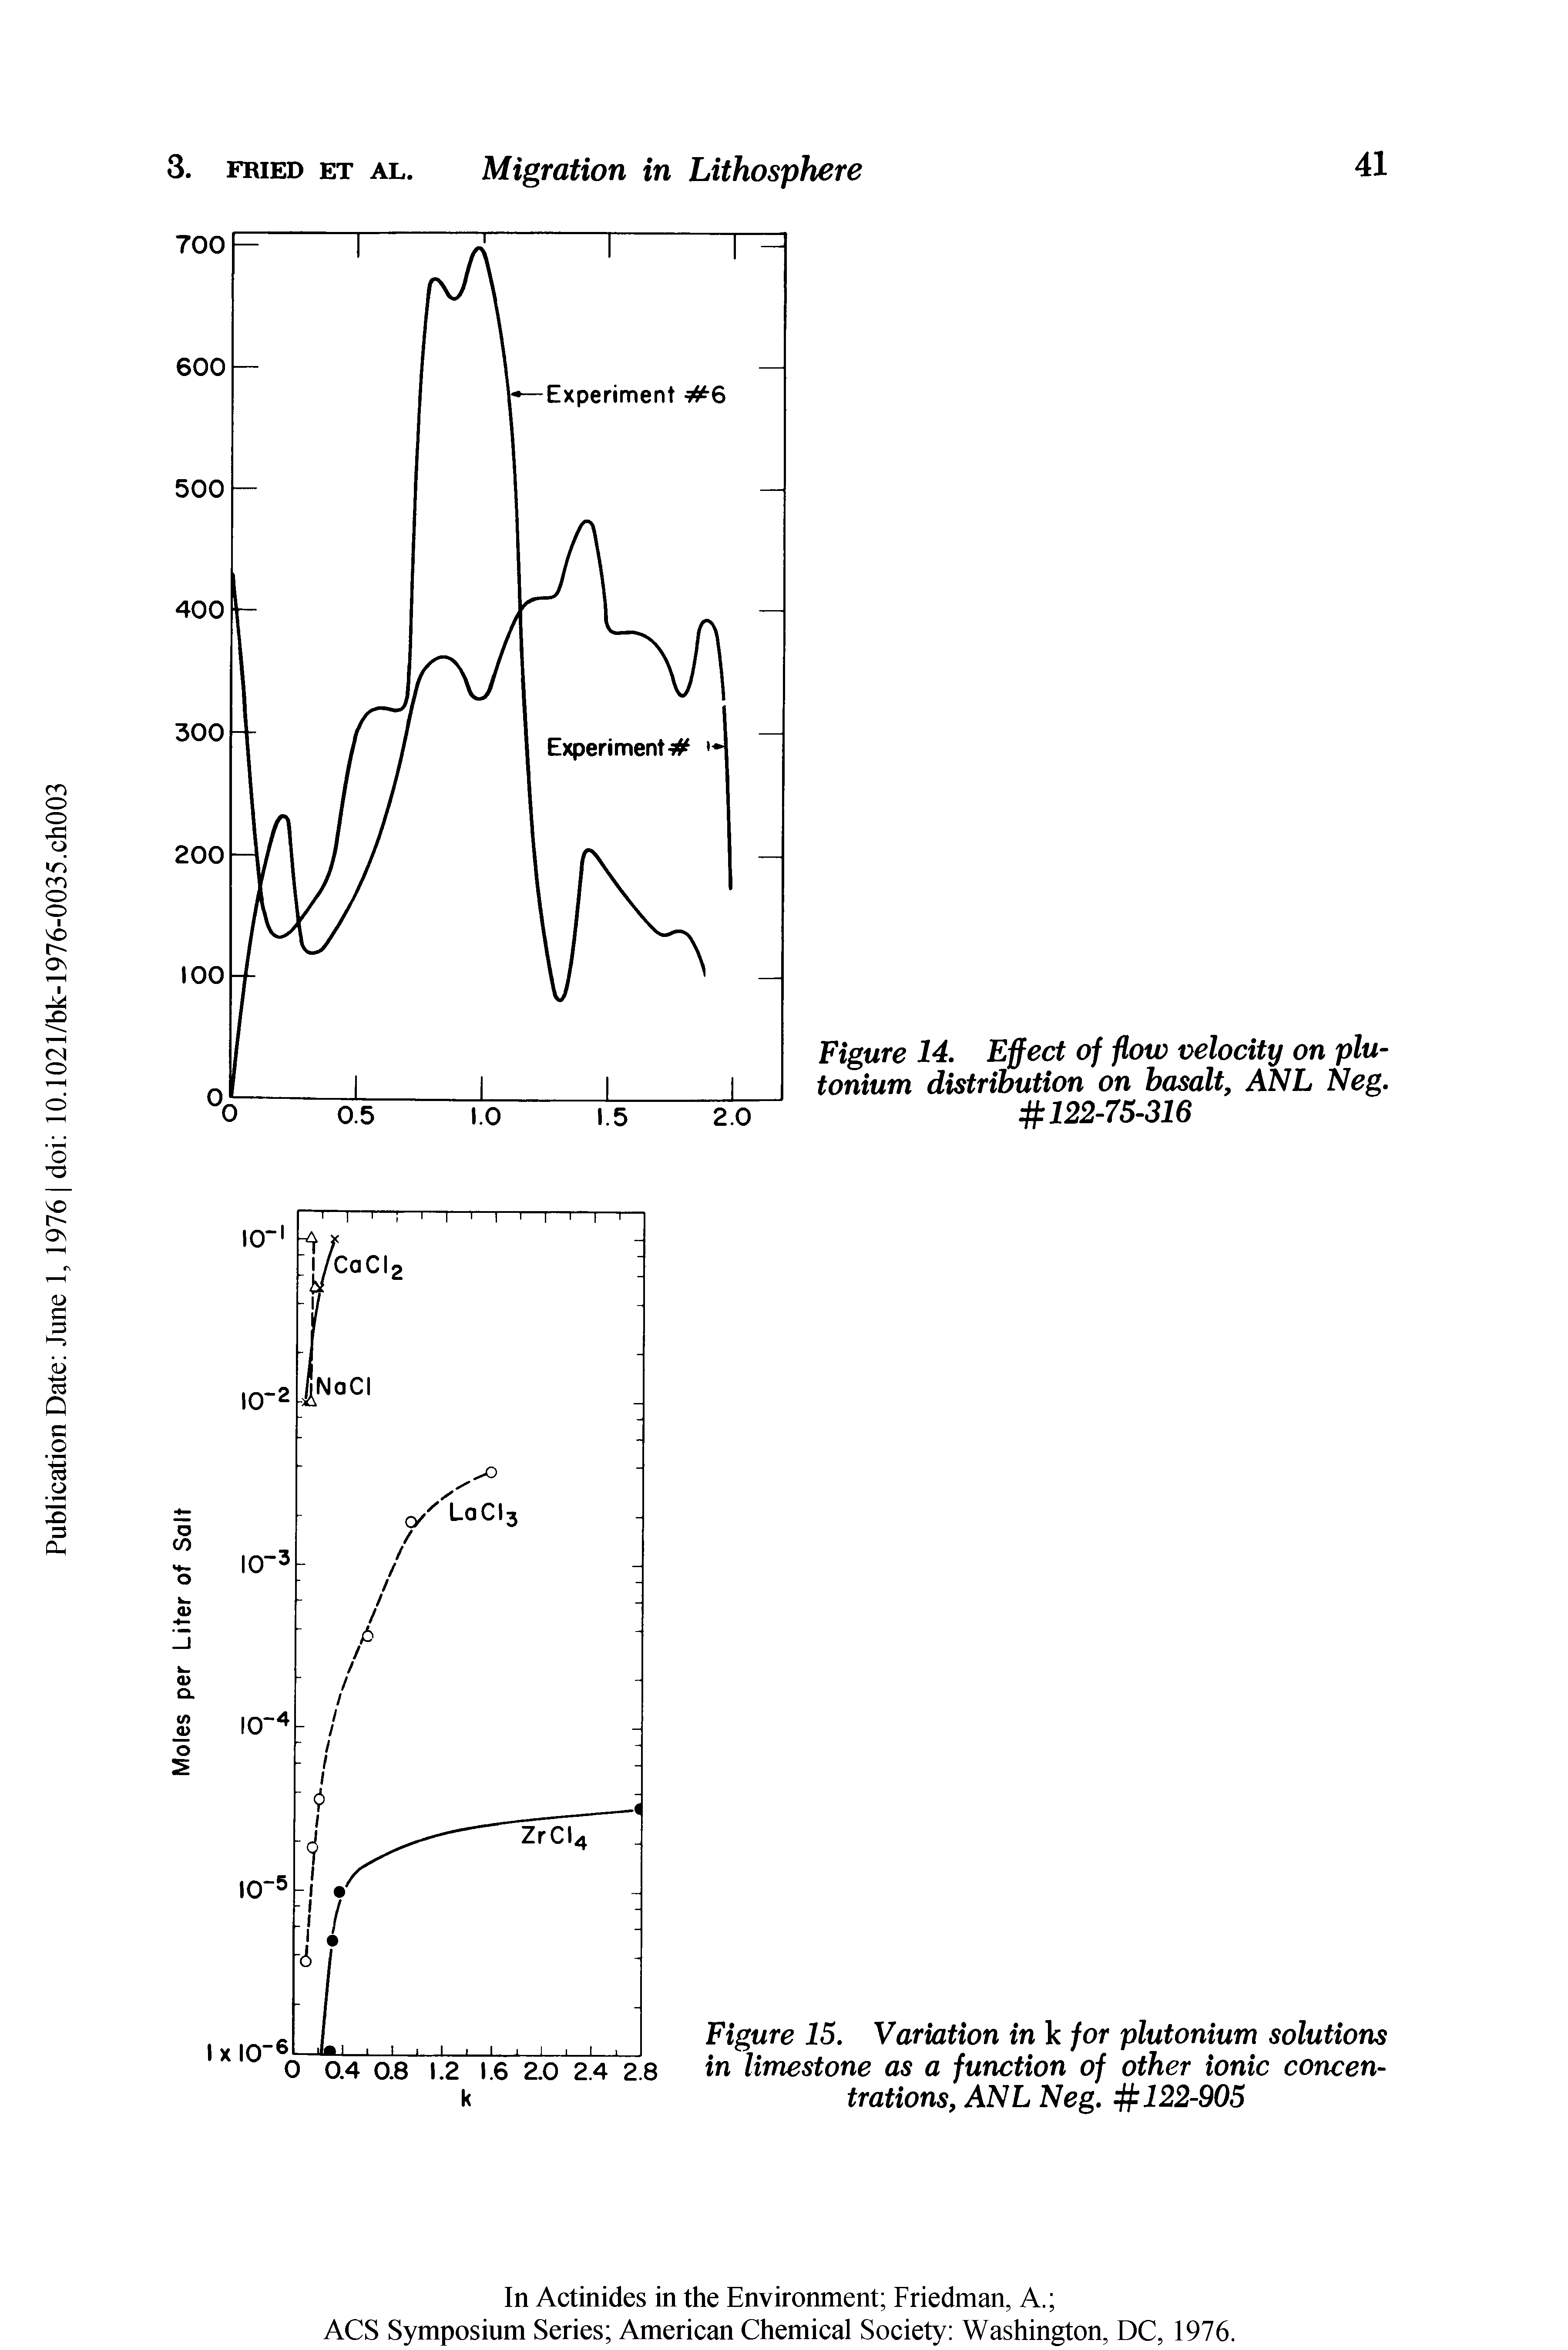 Figure 14. Effect of flow velocity on plutonium distribution on basalt, ANL Neg. 122-75-316...